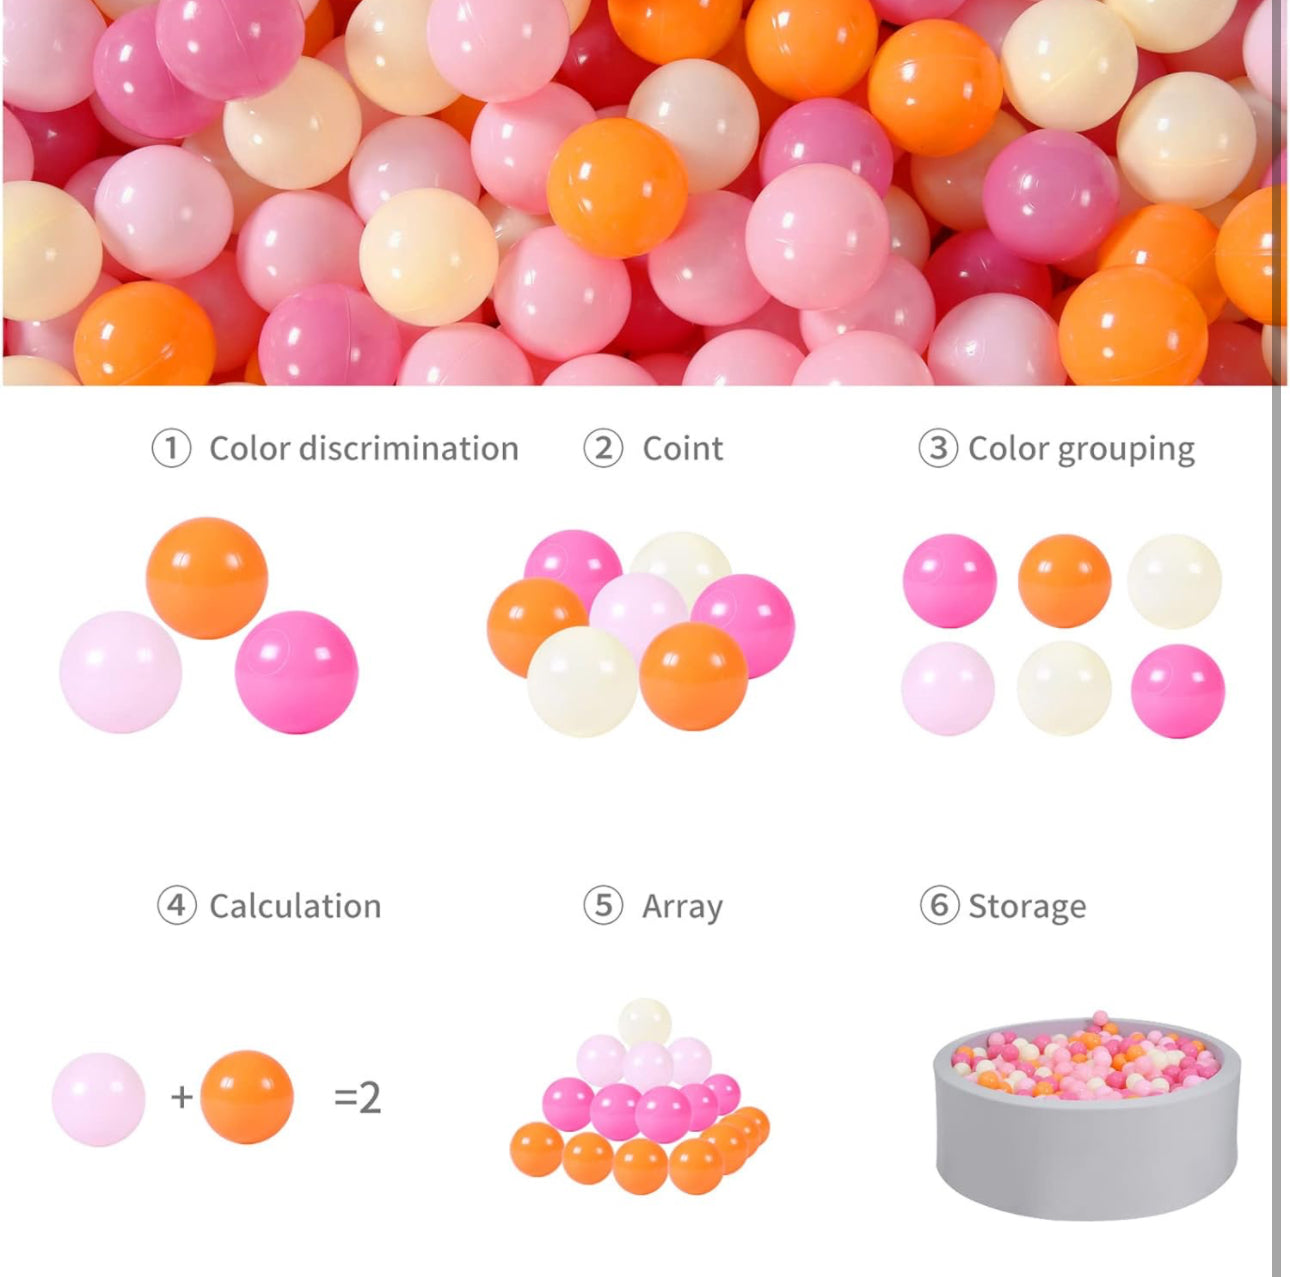 GOGOSO Pit Balls Pink Balls for Playhouse, Playpen, Baby Pool, Play Ball Fun Centers, Phthalate Free BPA Free,100 Balls